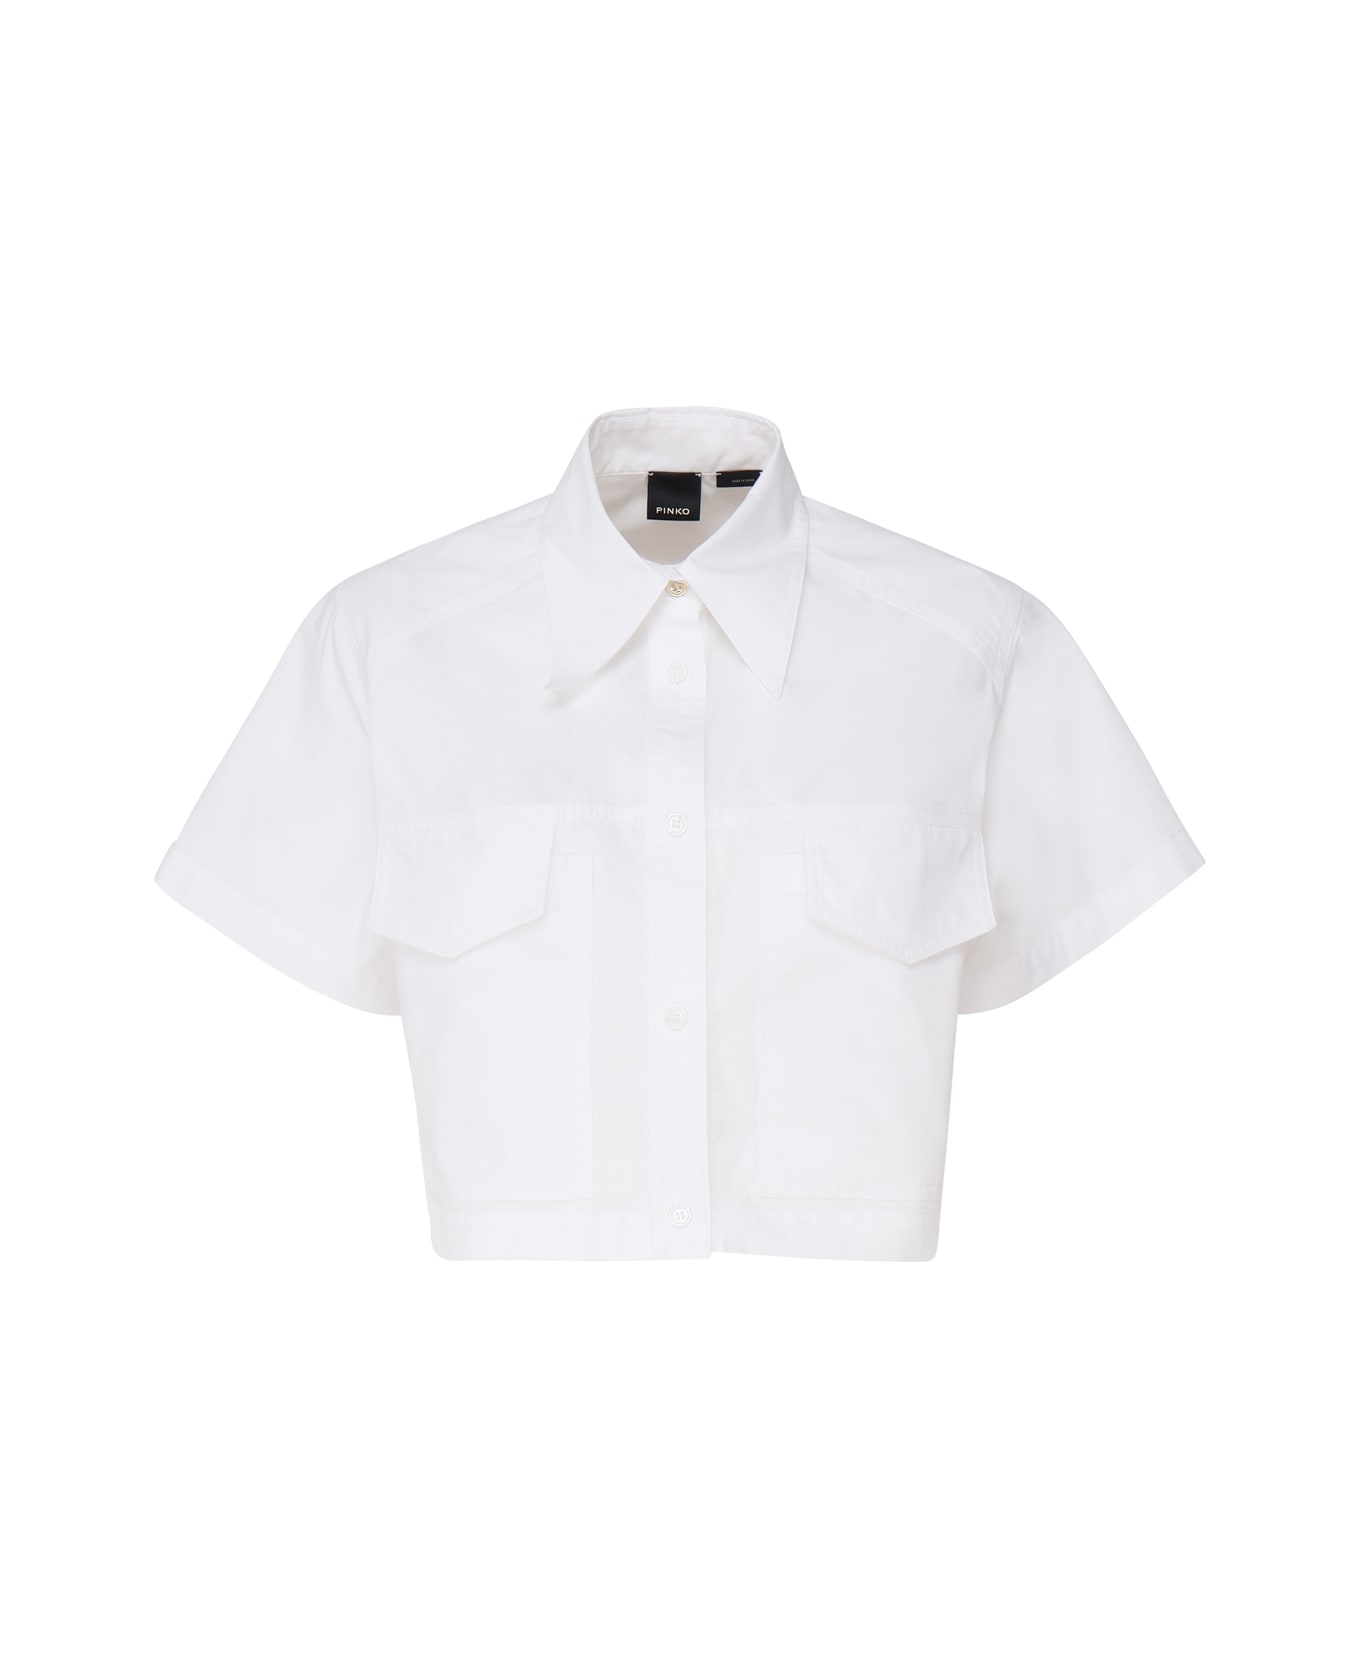 Pinko Cotton Crop Shirt - White シャツ